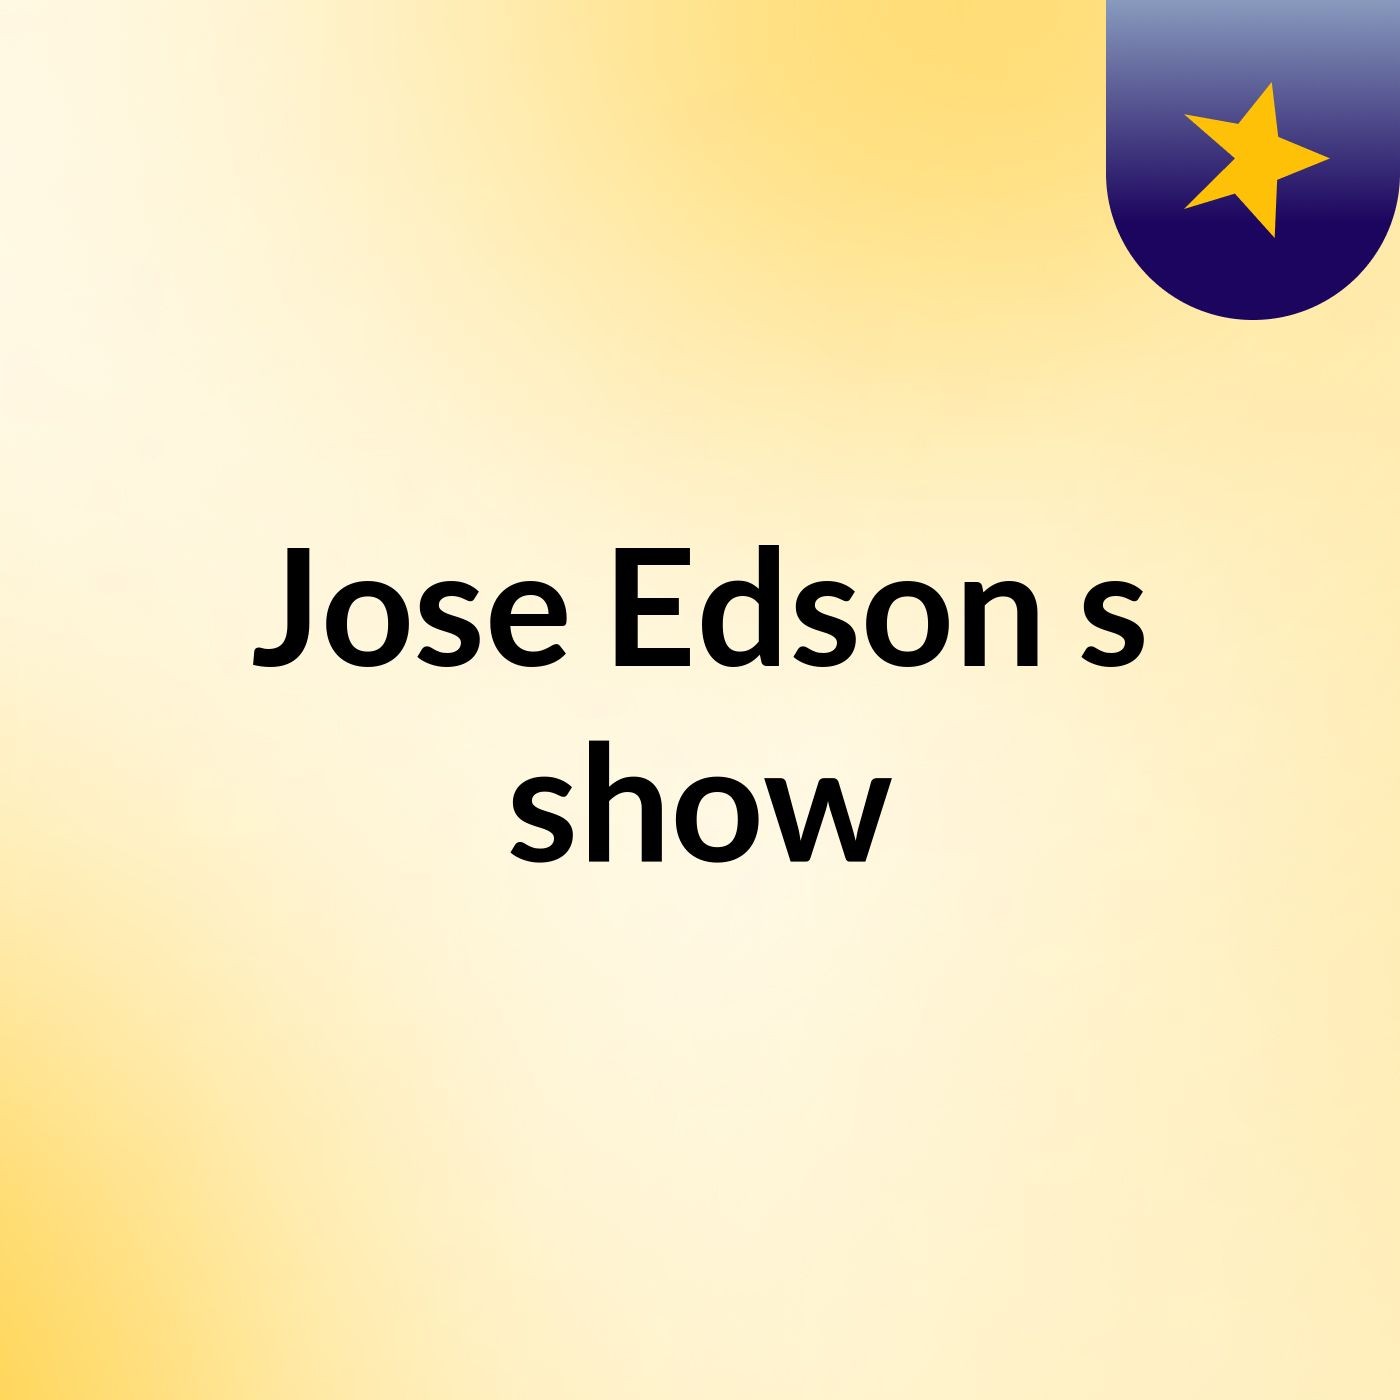 Jose Edson's show